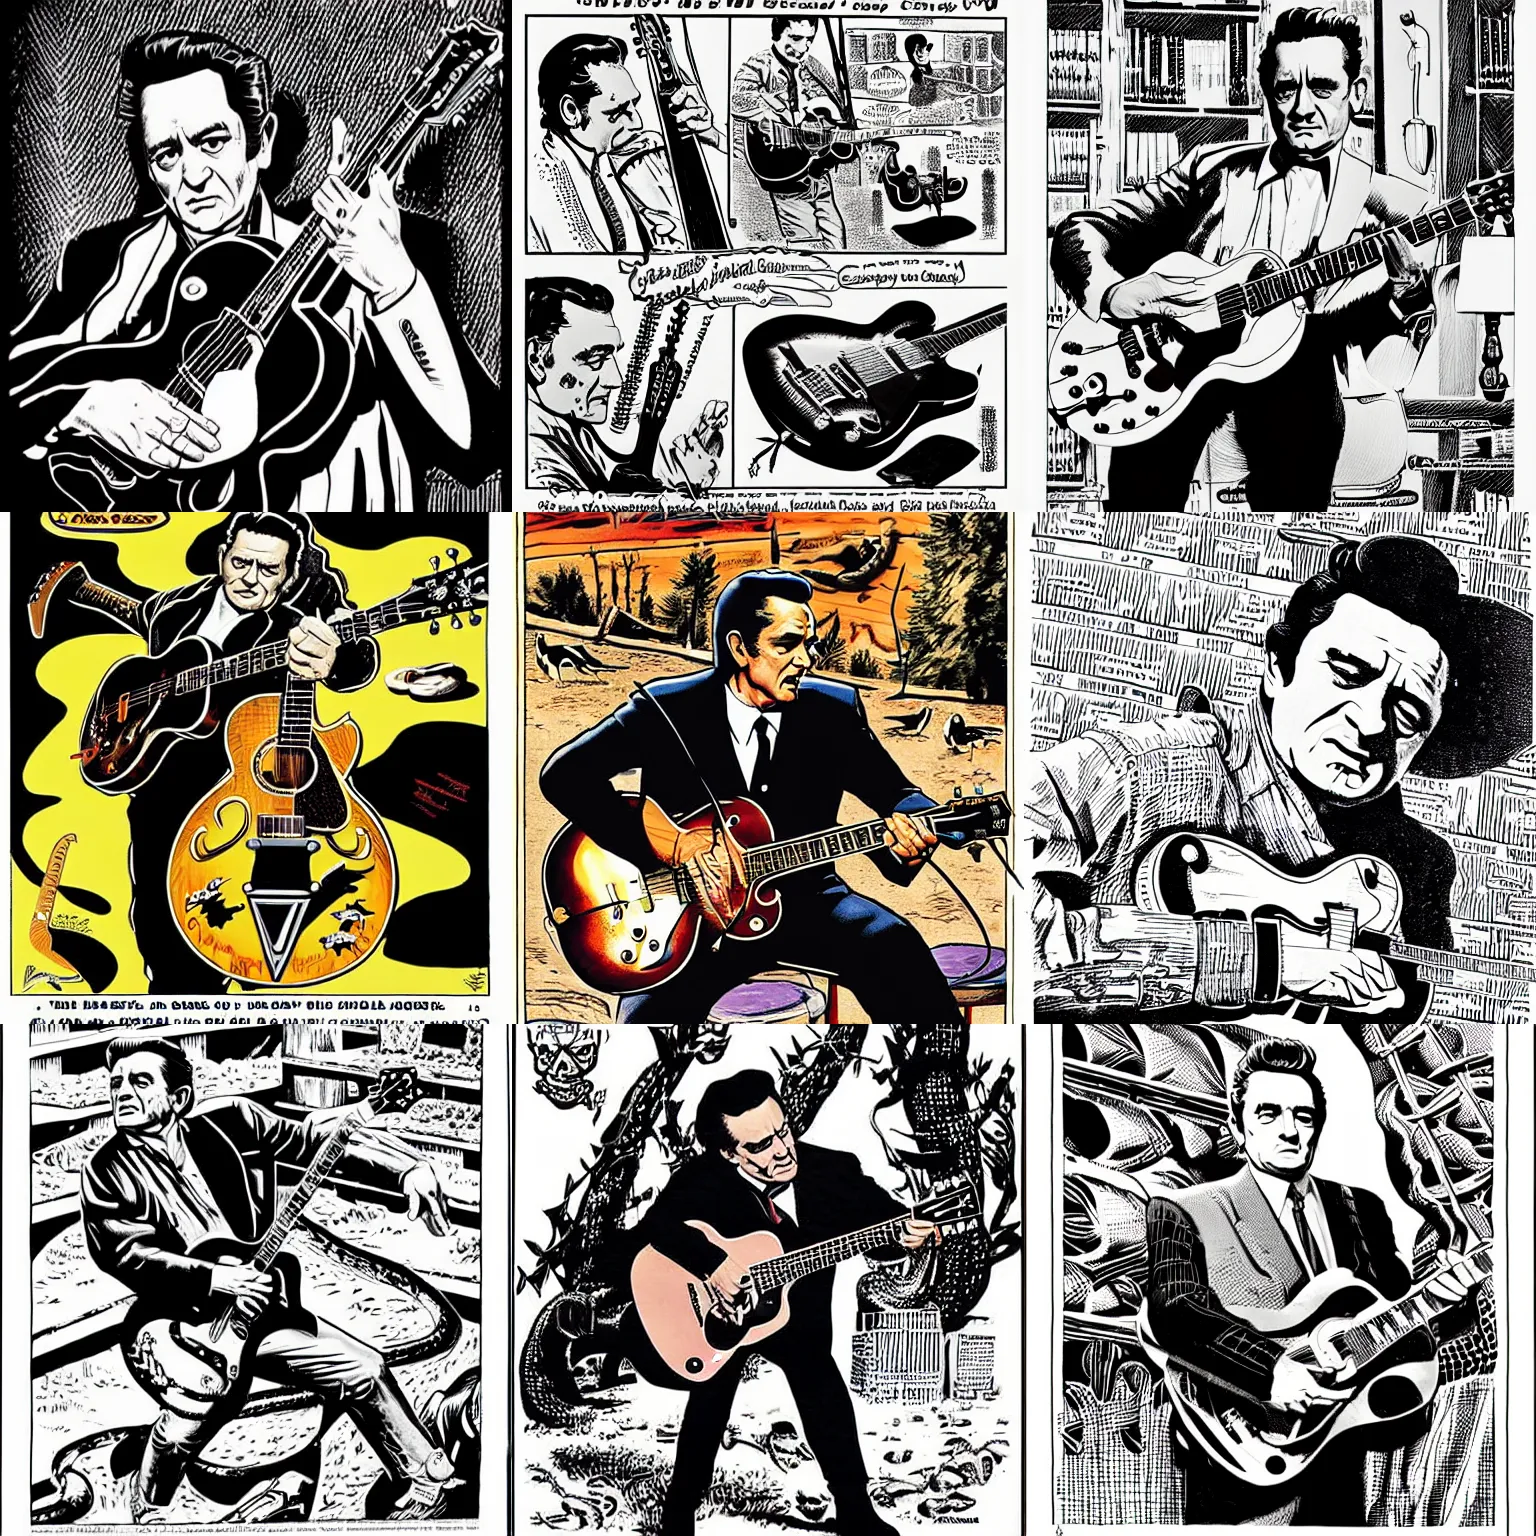 Prompt: Johnny Cash shredding on a Gibson ES-355, snakes and barrels of snake oil all around, quack medicine, groovy, art by Al Feldstein